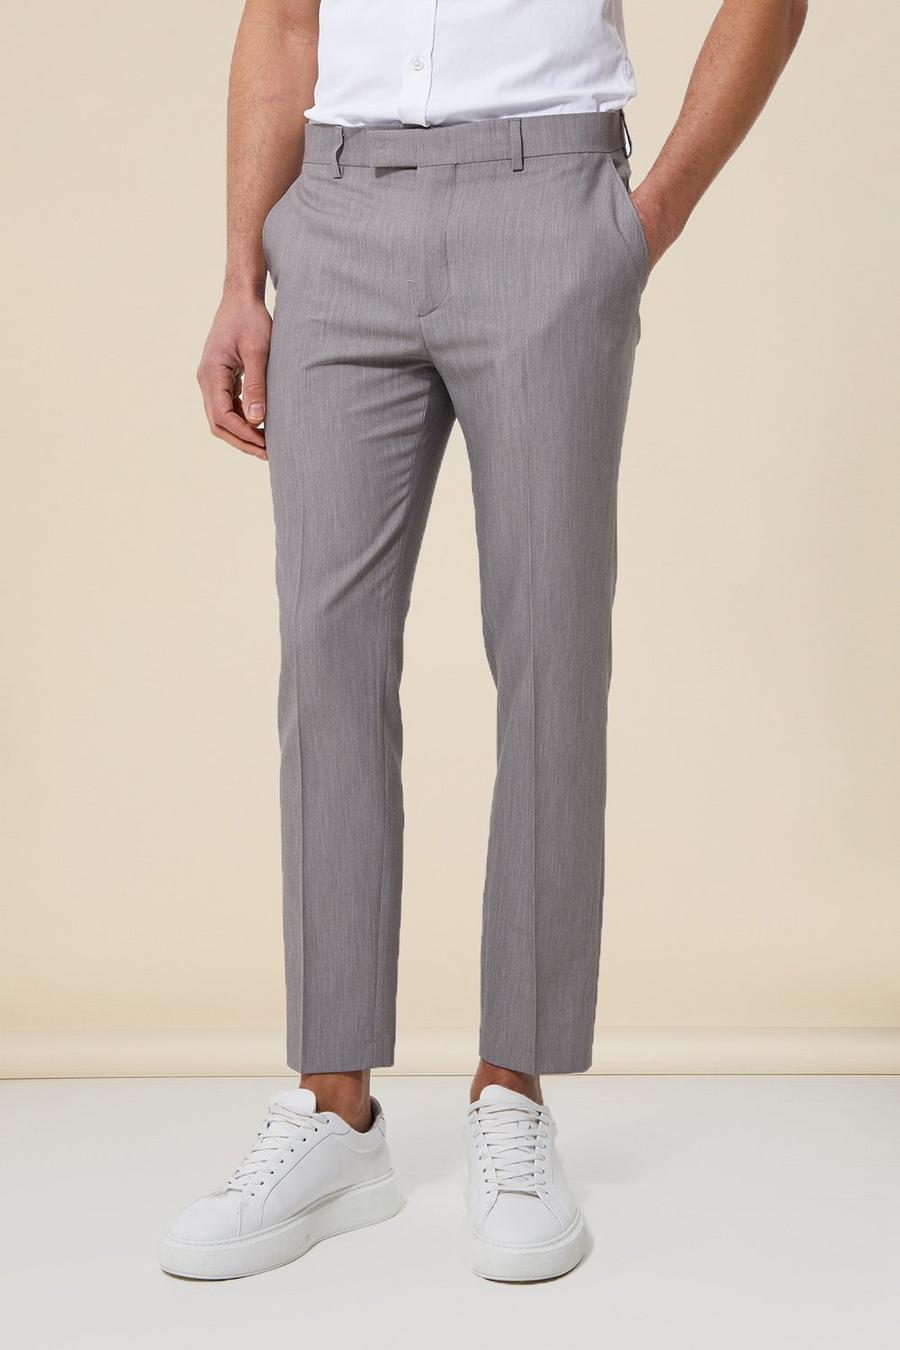 Pantaloni completo alle caviglie Skinny Fit, Grey grigio